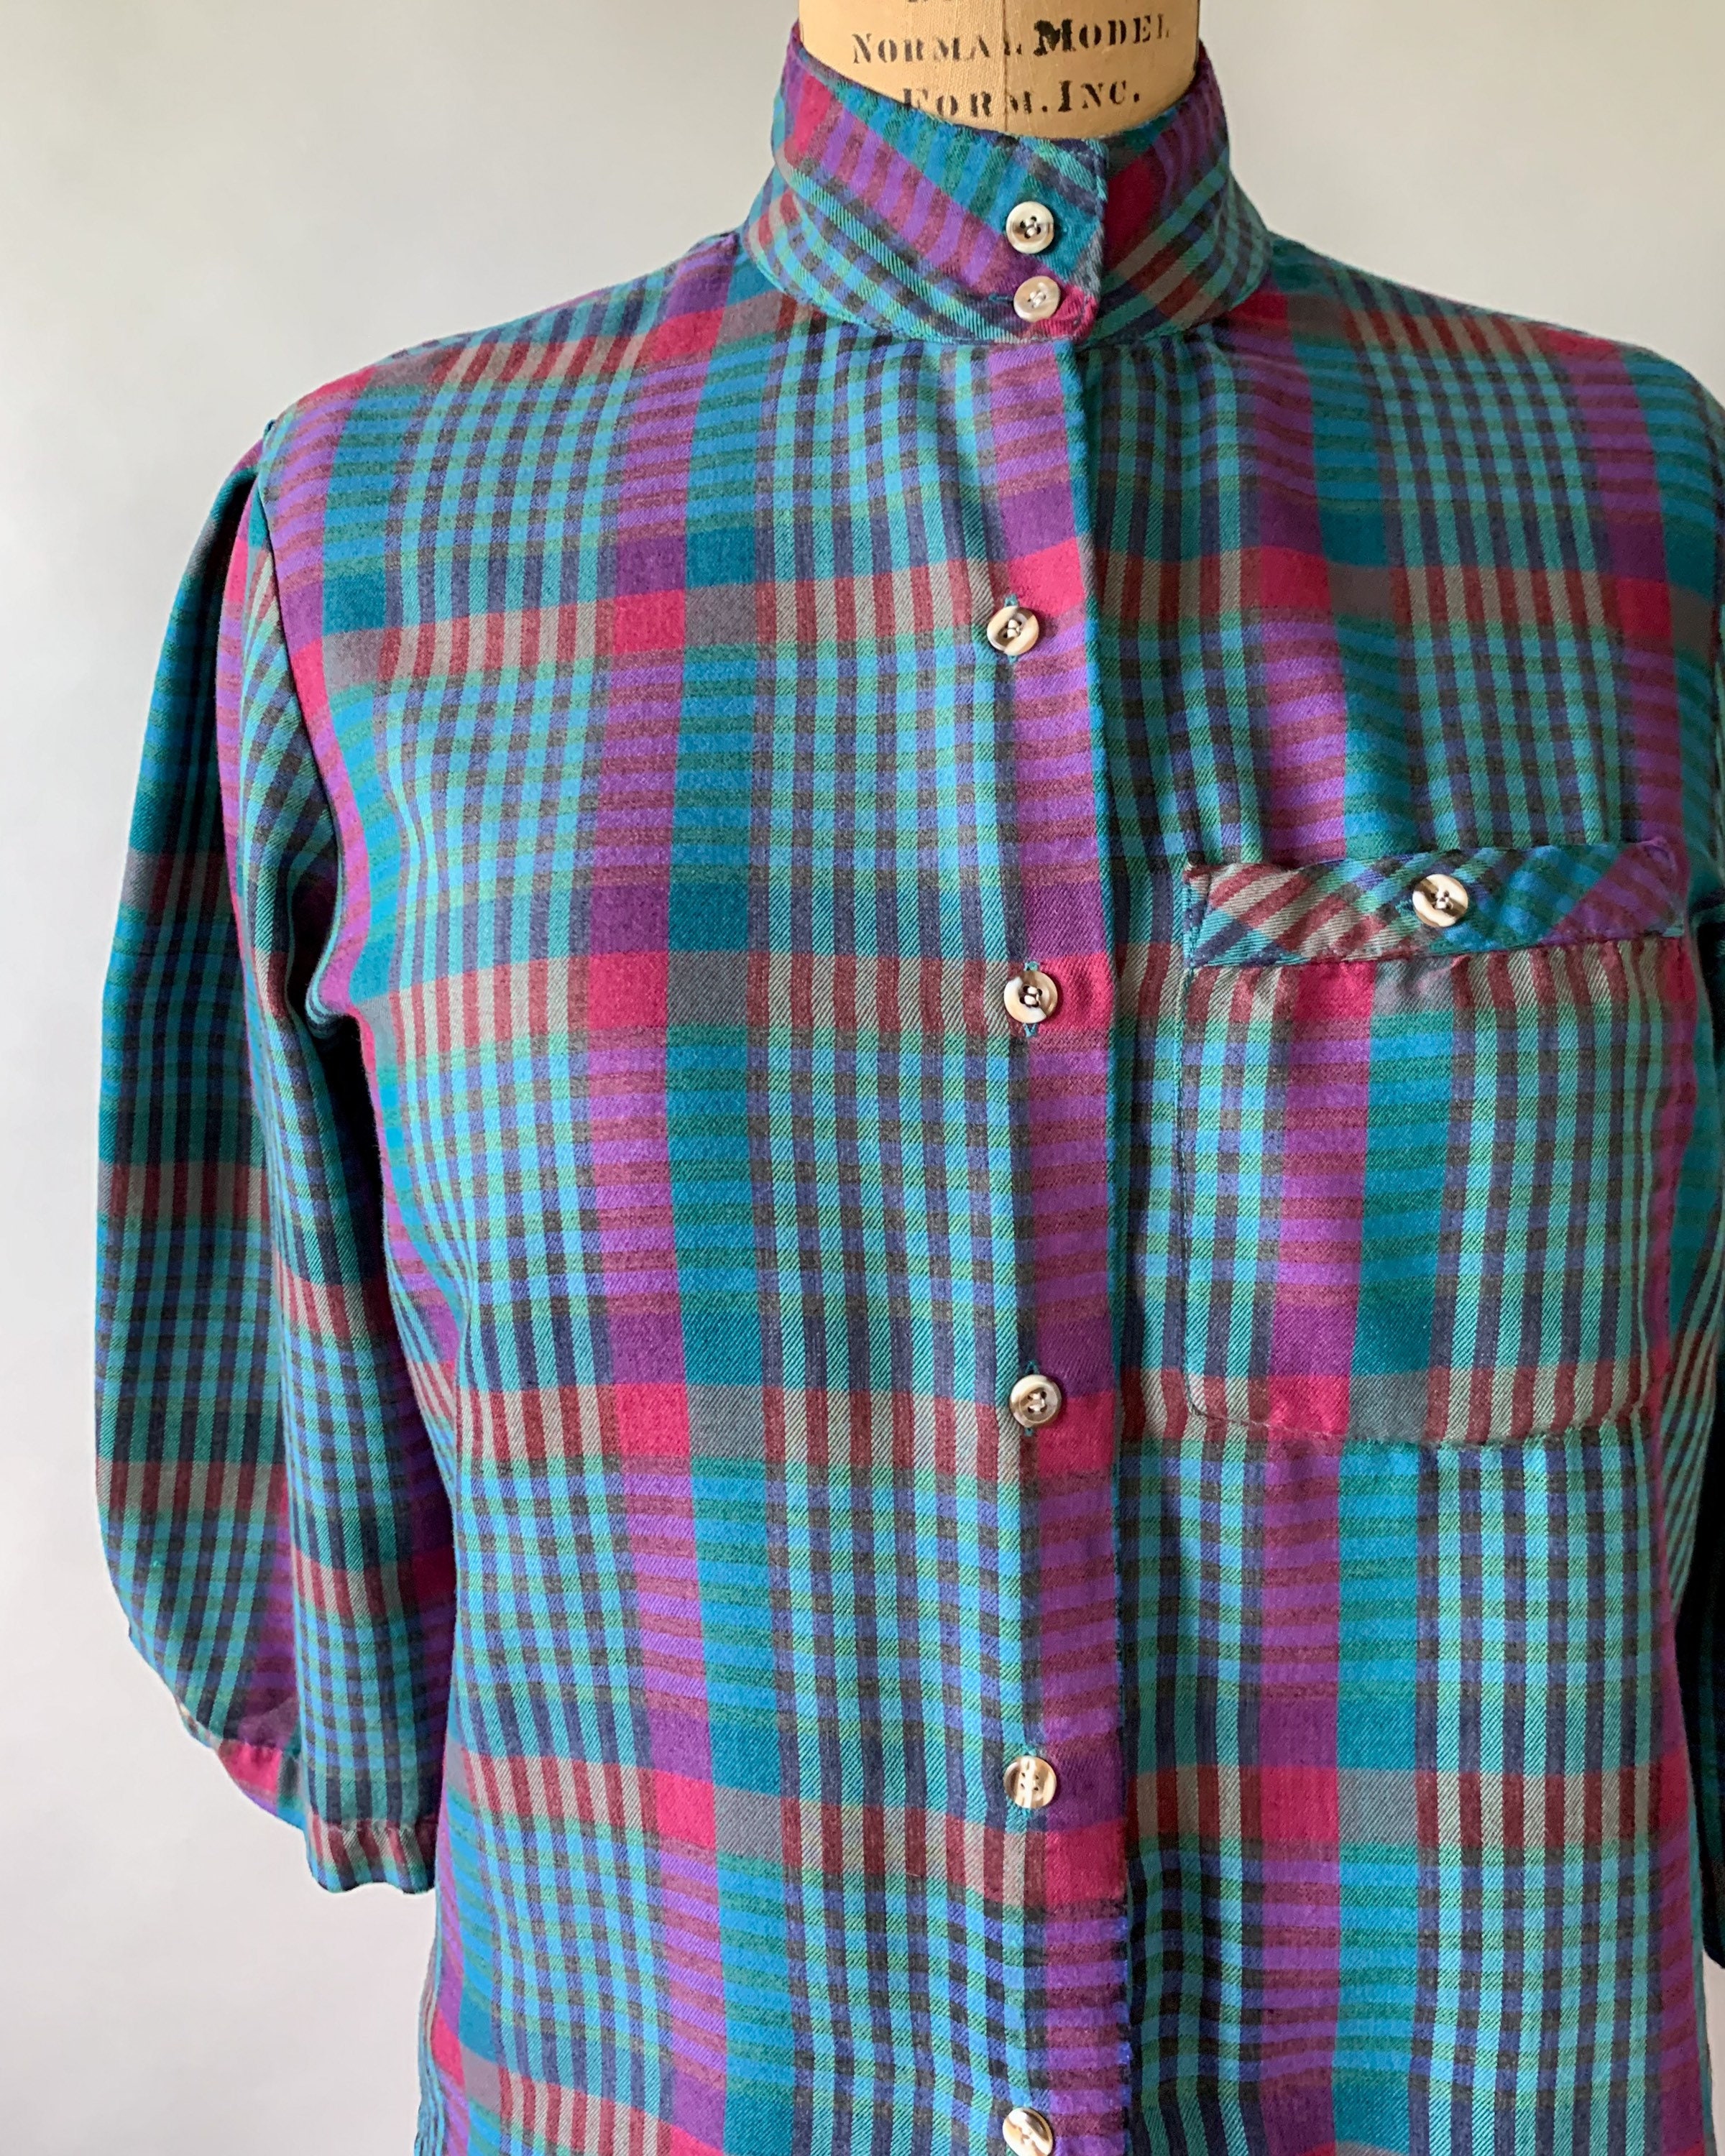 Vintage 1980s teal jewel tone plaid button down shirt, Medium